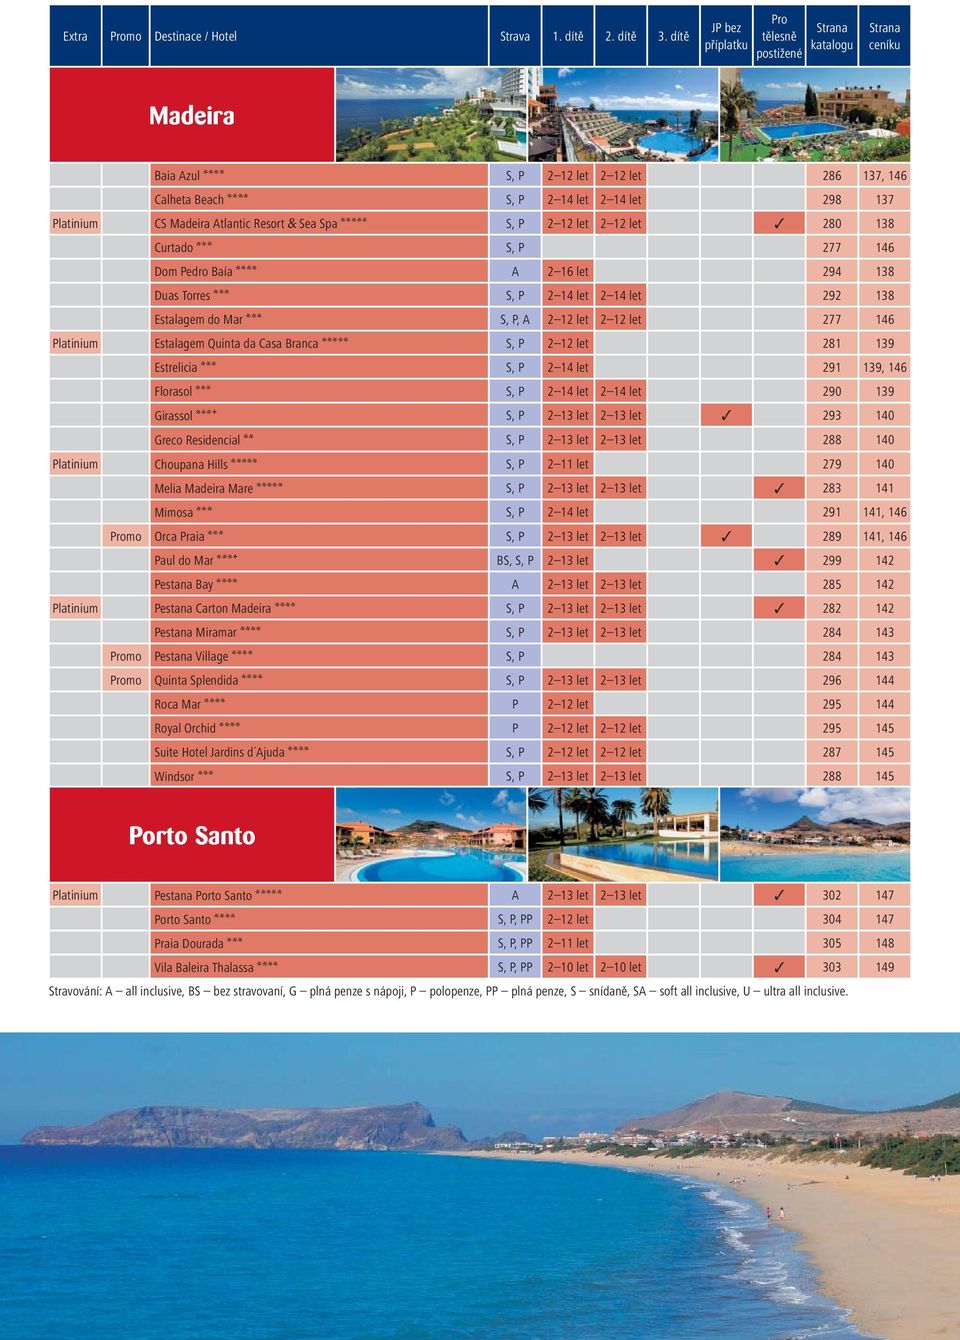 Madeira Atlantic Resort & Sea Spa aaaaa S, P 2 12 let 2 12 let 280 138 Curtado aaa S, P 277 146 Dom Pedro Baía aaaa A 2 16 let 294 138 Duas Torres aaa S, P 2 14 let 2 14 let 292 138 Estalagem do Mar